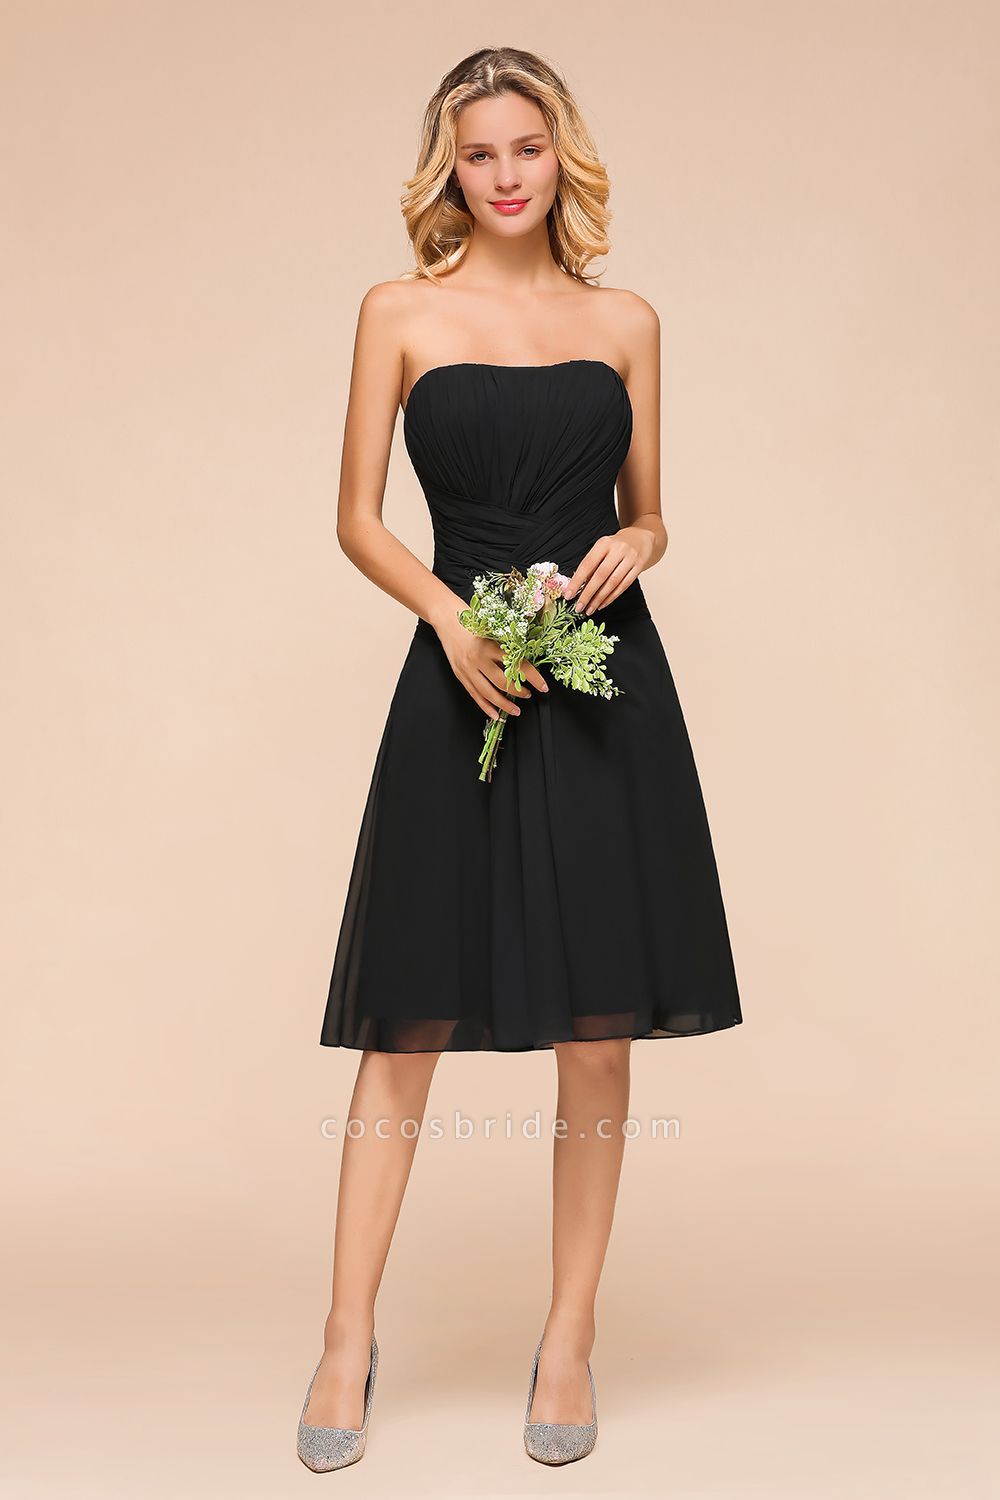 Chic Black Chiffon Strapless Backless Knee-length A-Line Bridesmaid Dress